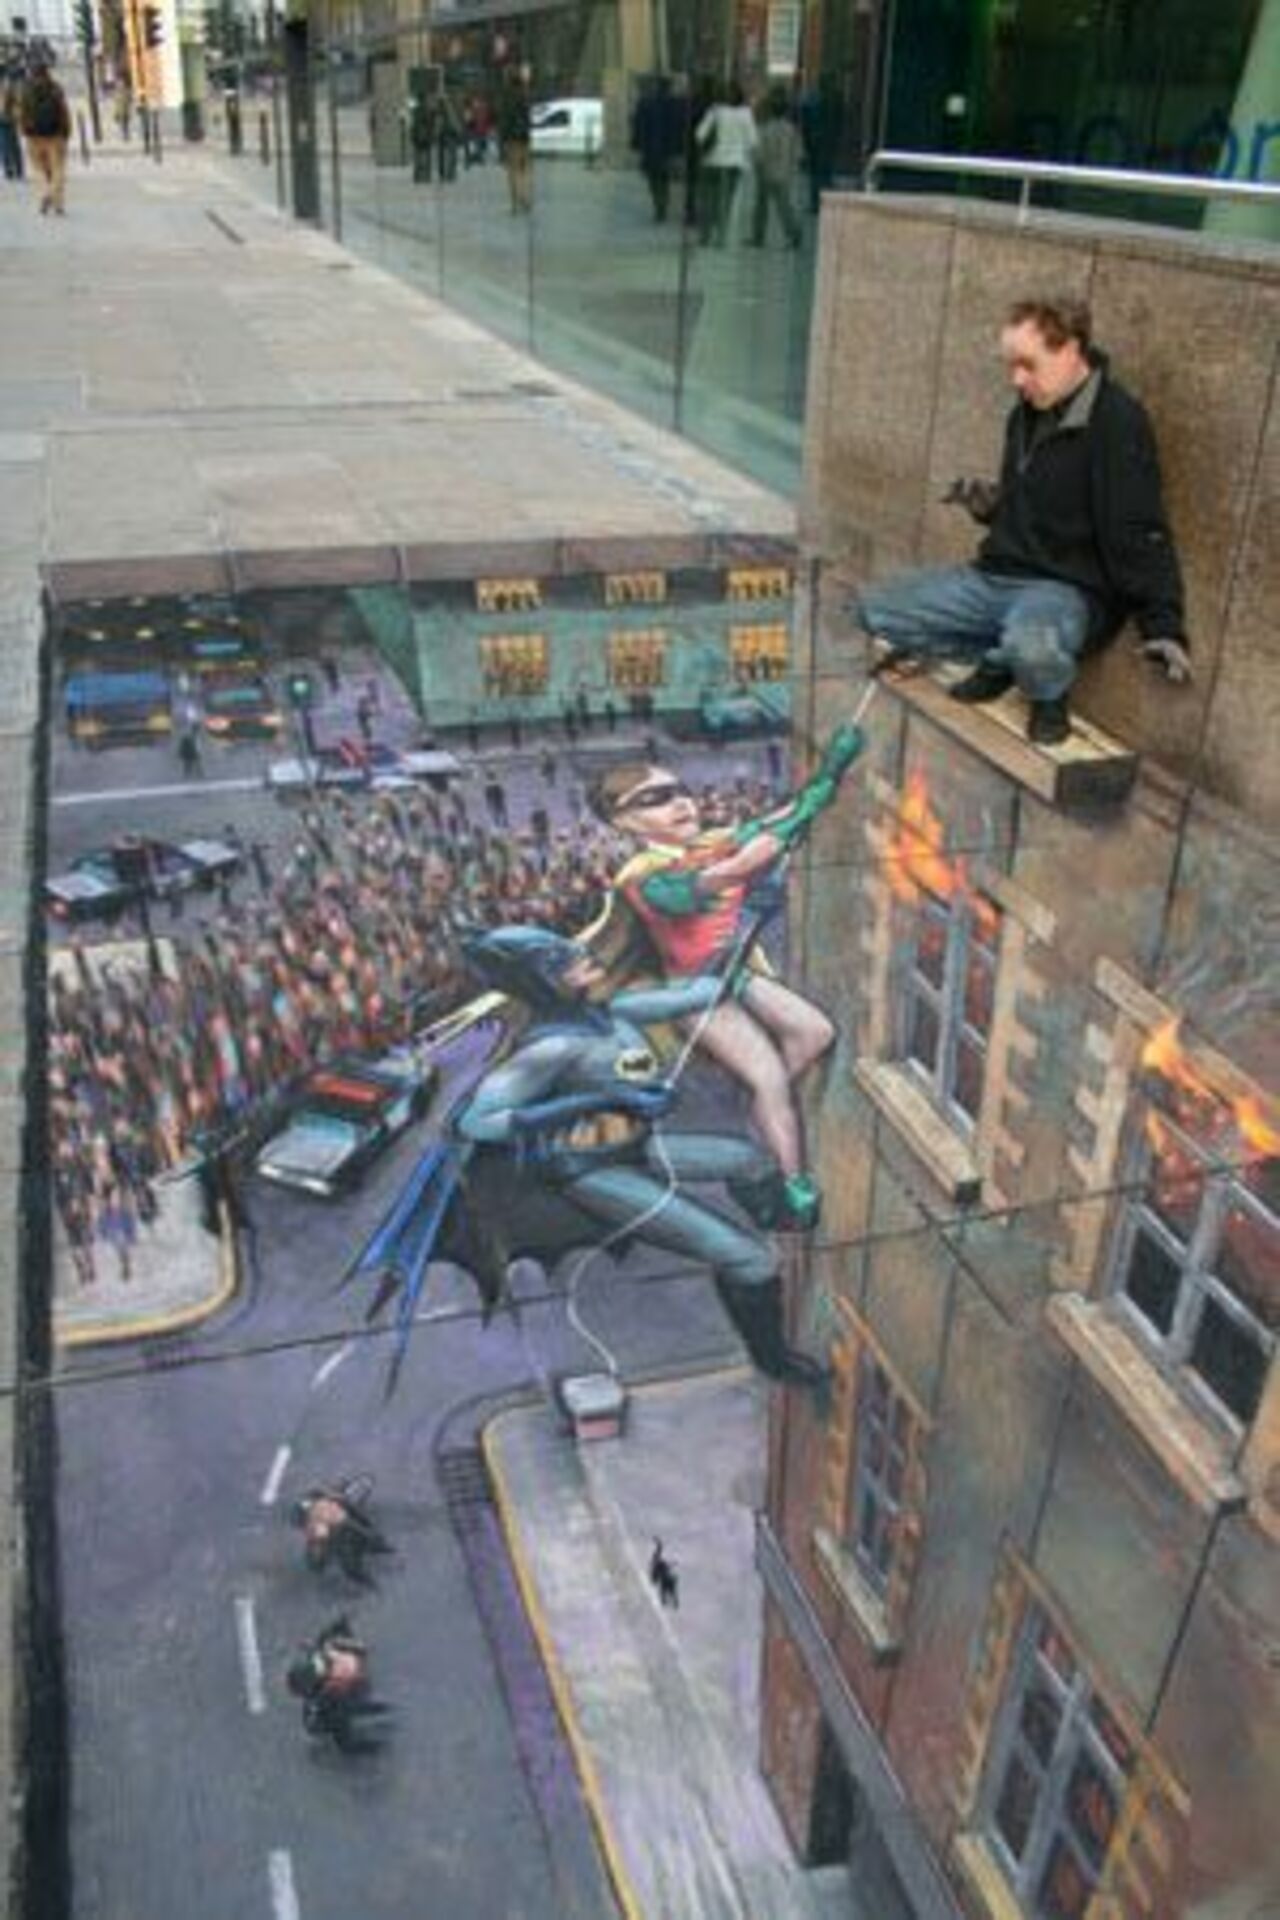 RIP Adam West #Batman #AdamWest #AdamWestRIP #streetart #mural #graffiti #art https://t.co/0iAZbnBhhi